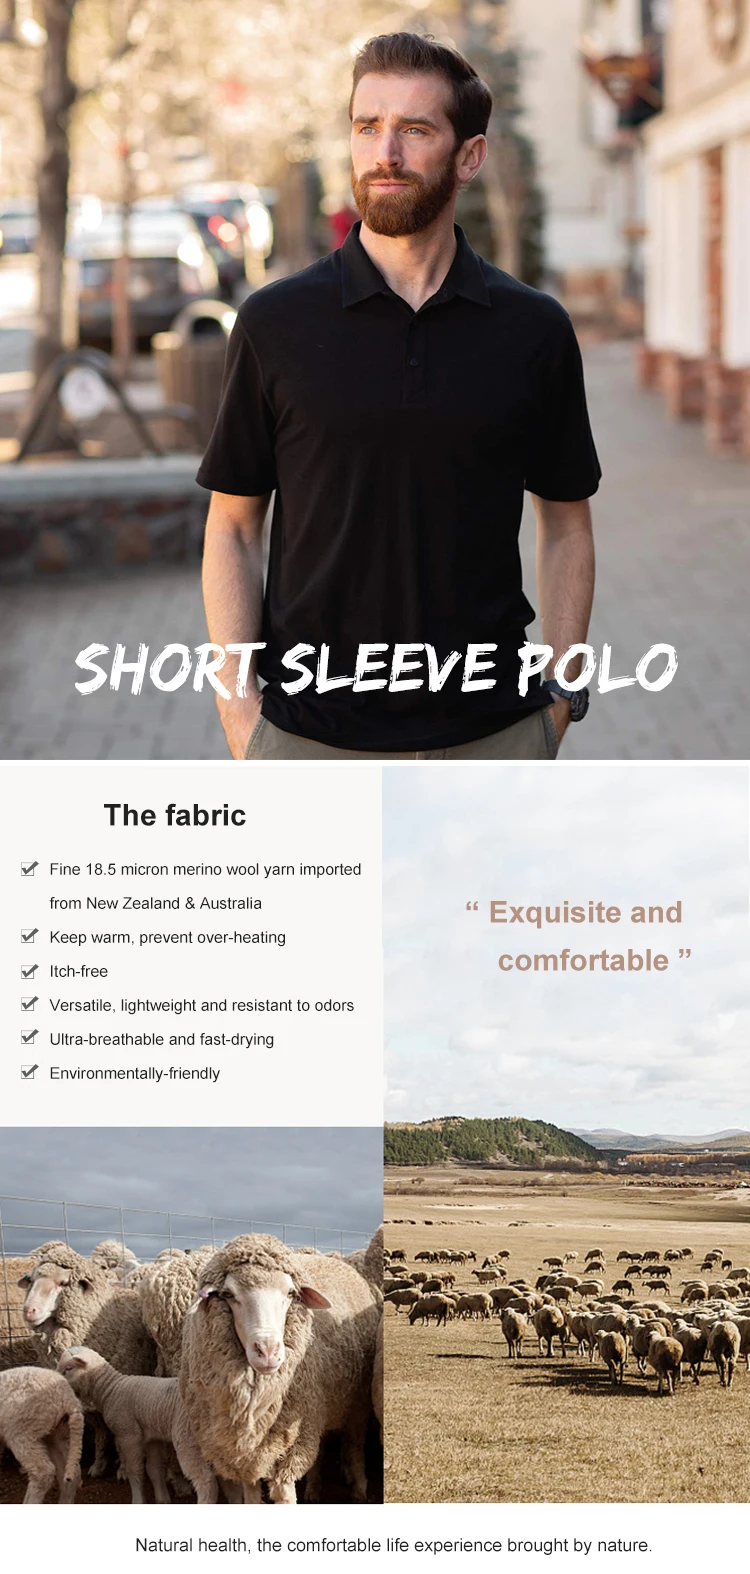 Enerup 100% merino wool polyester coolmax golf camisas camisetas polo suit tops t-shirt